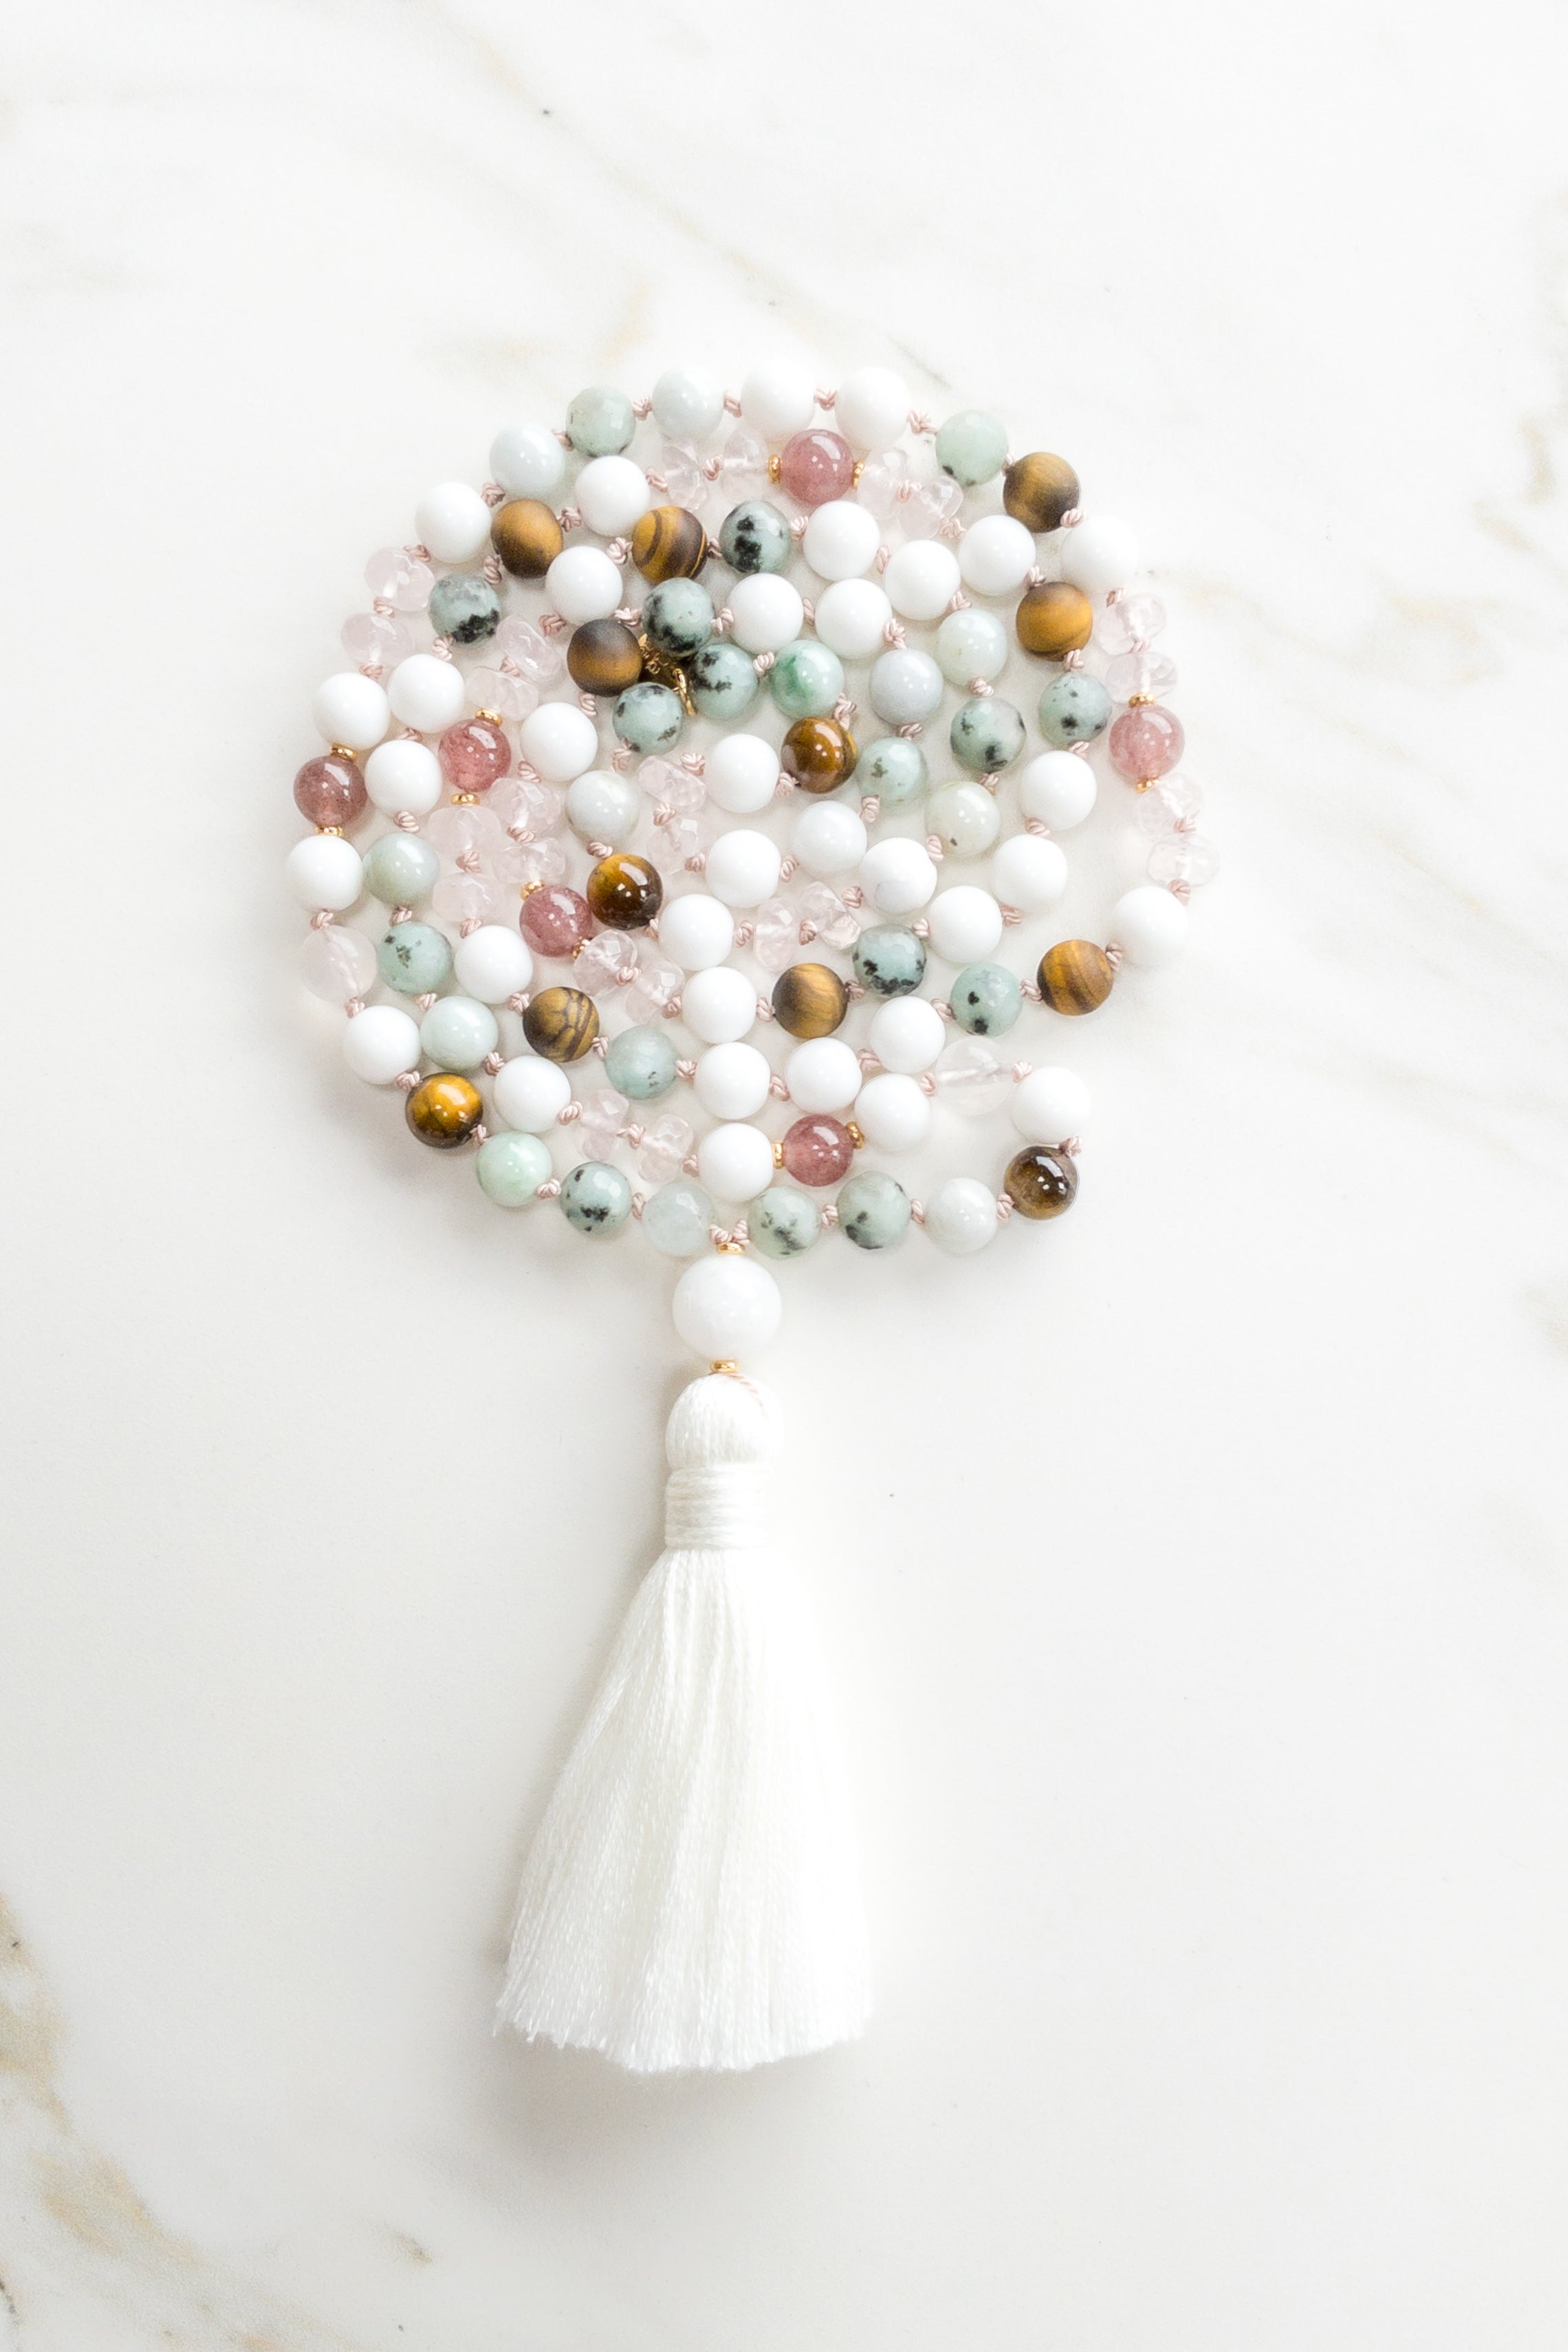 Lotus Serenity Mala beads - kiwi jasper, pink strawberry quartz, white onyx, tiger eye - OceanEye - ShaShã jewelry Switzerland - yoga meditation inspired jewelry 